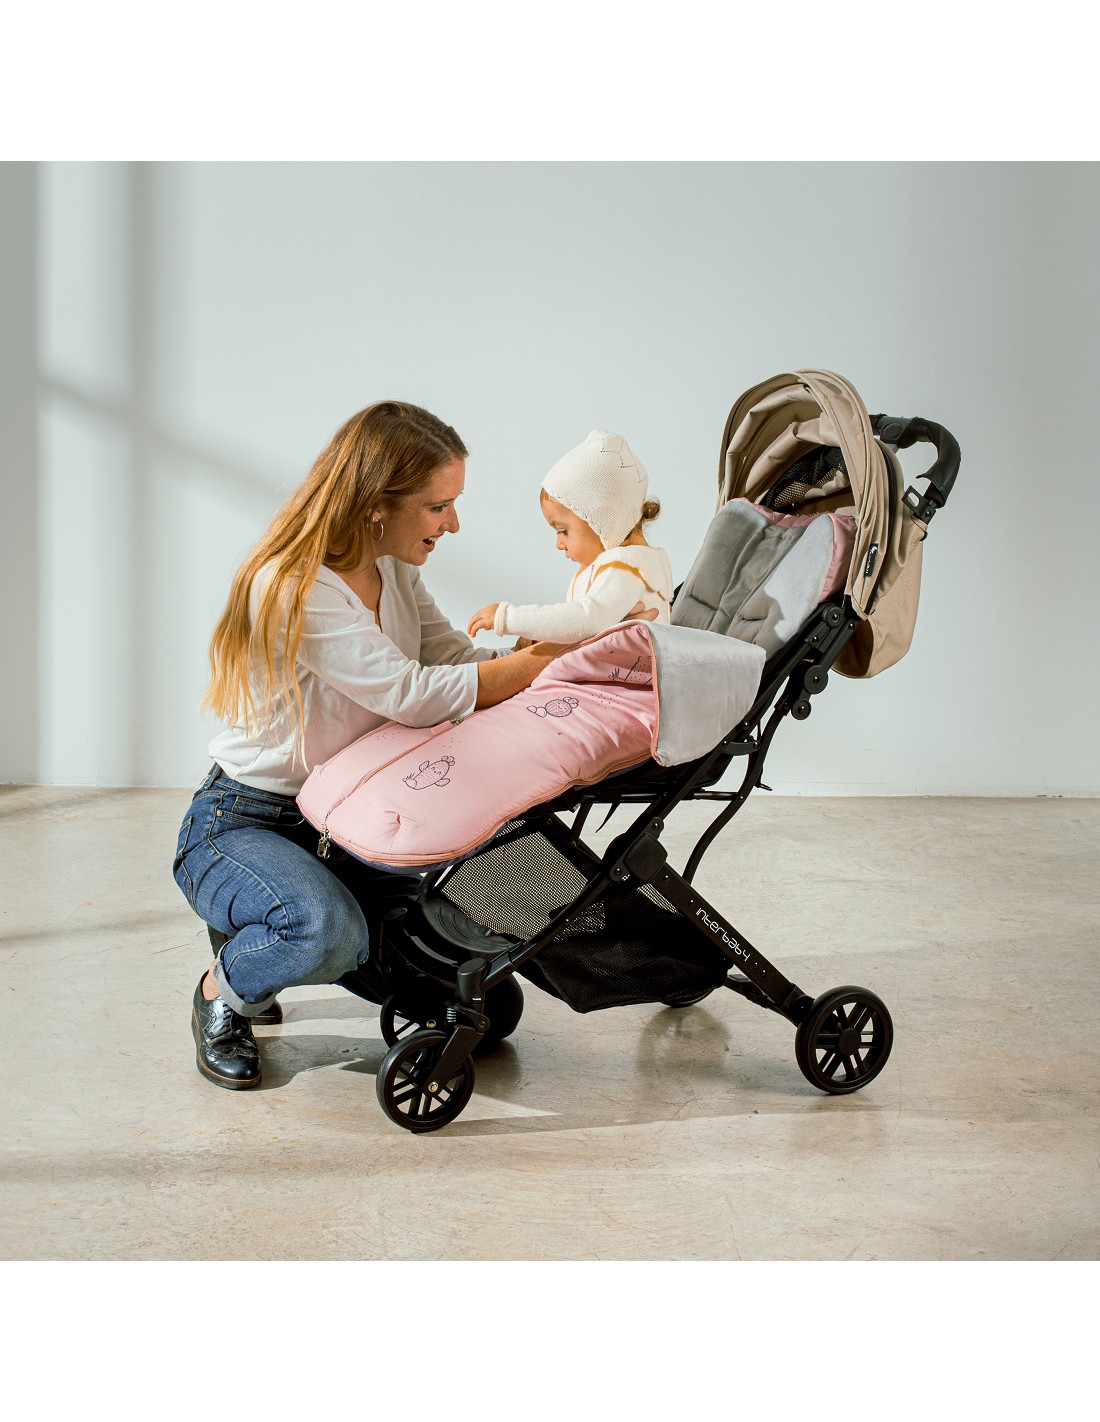 Saco silla de paseo carro interbaby bebe niñoa universal mod 10079